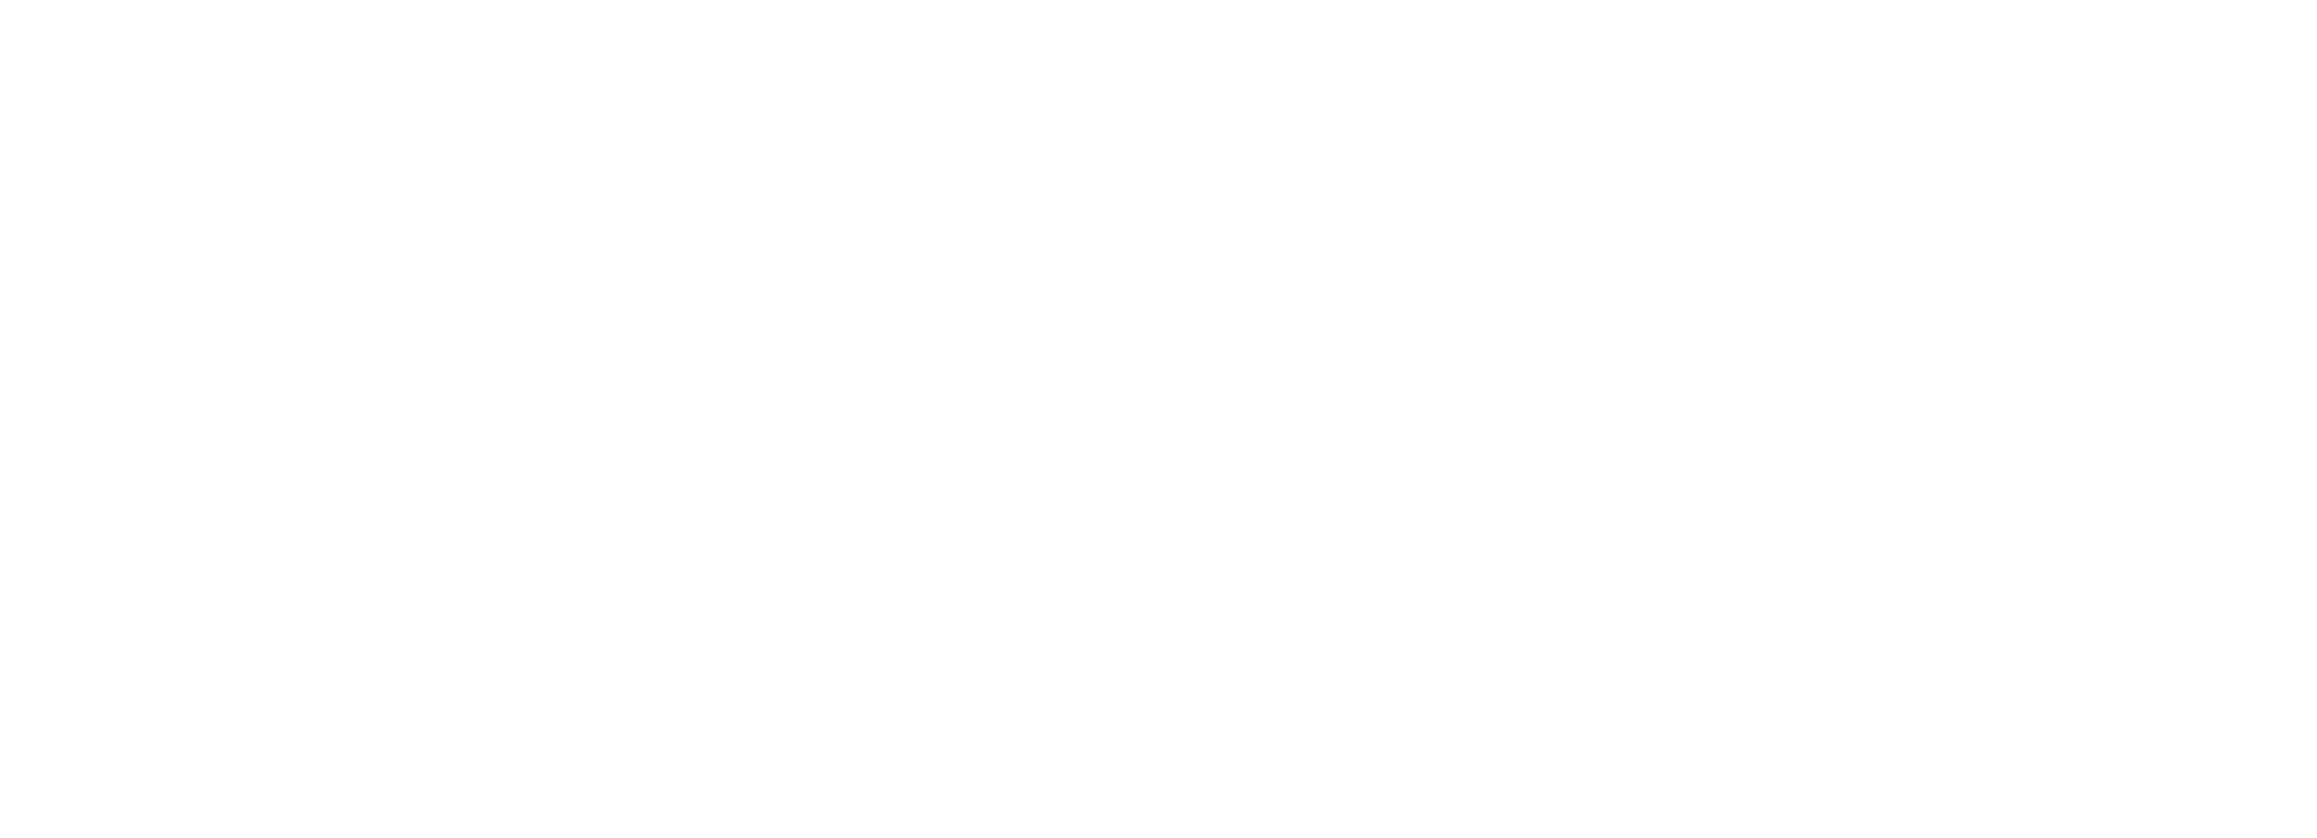 TNT Express logo